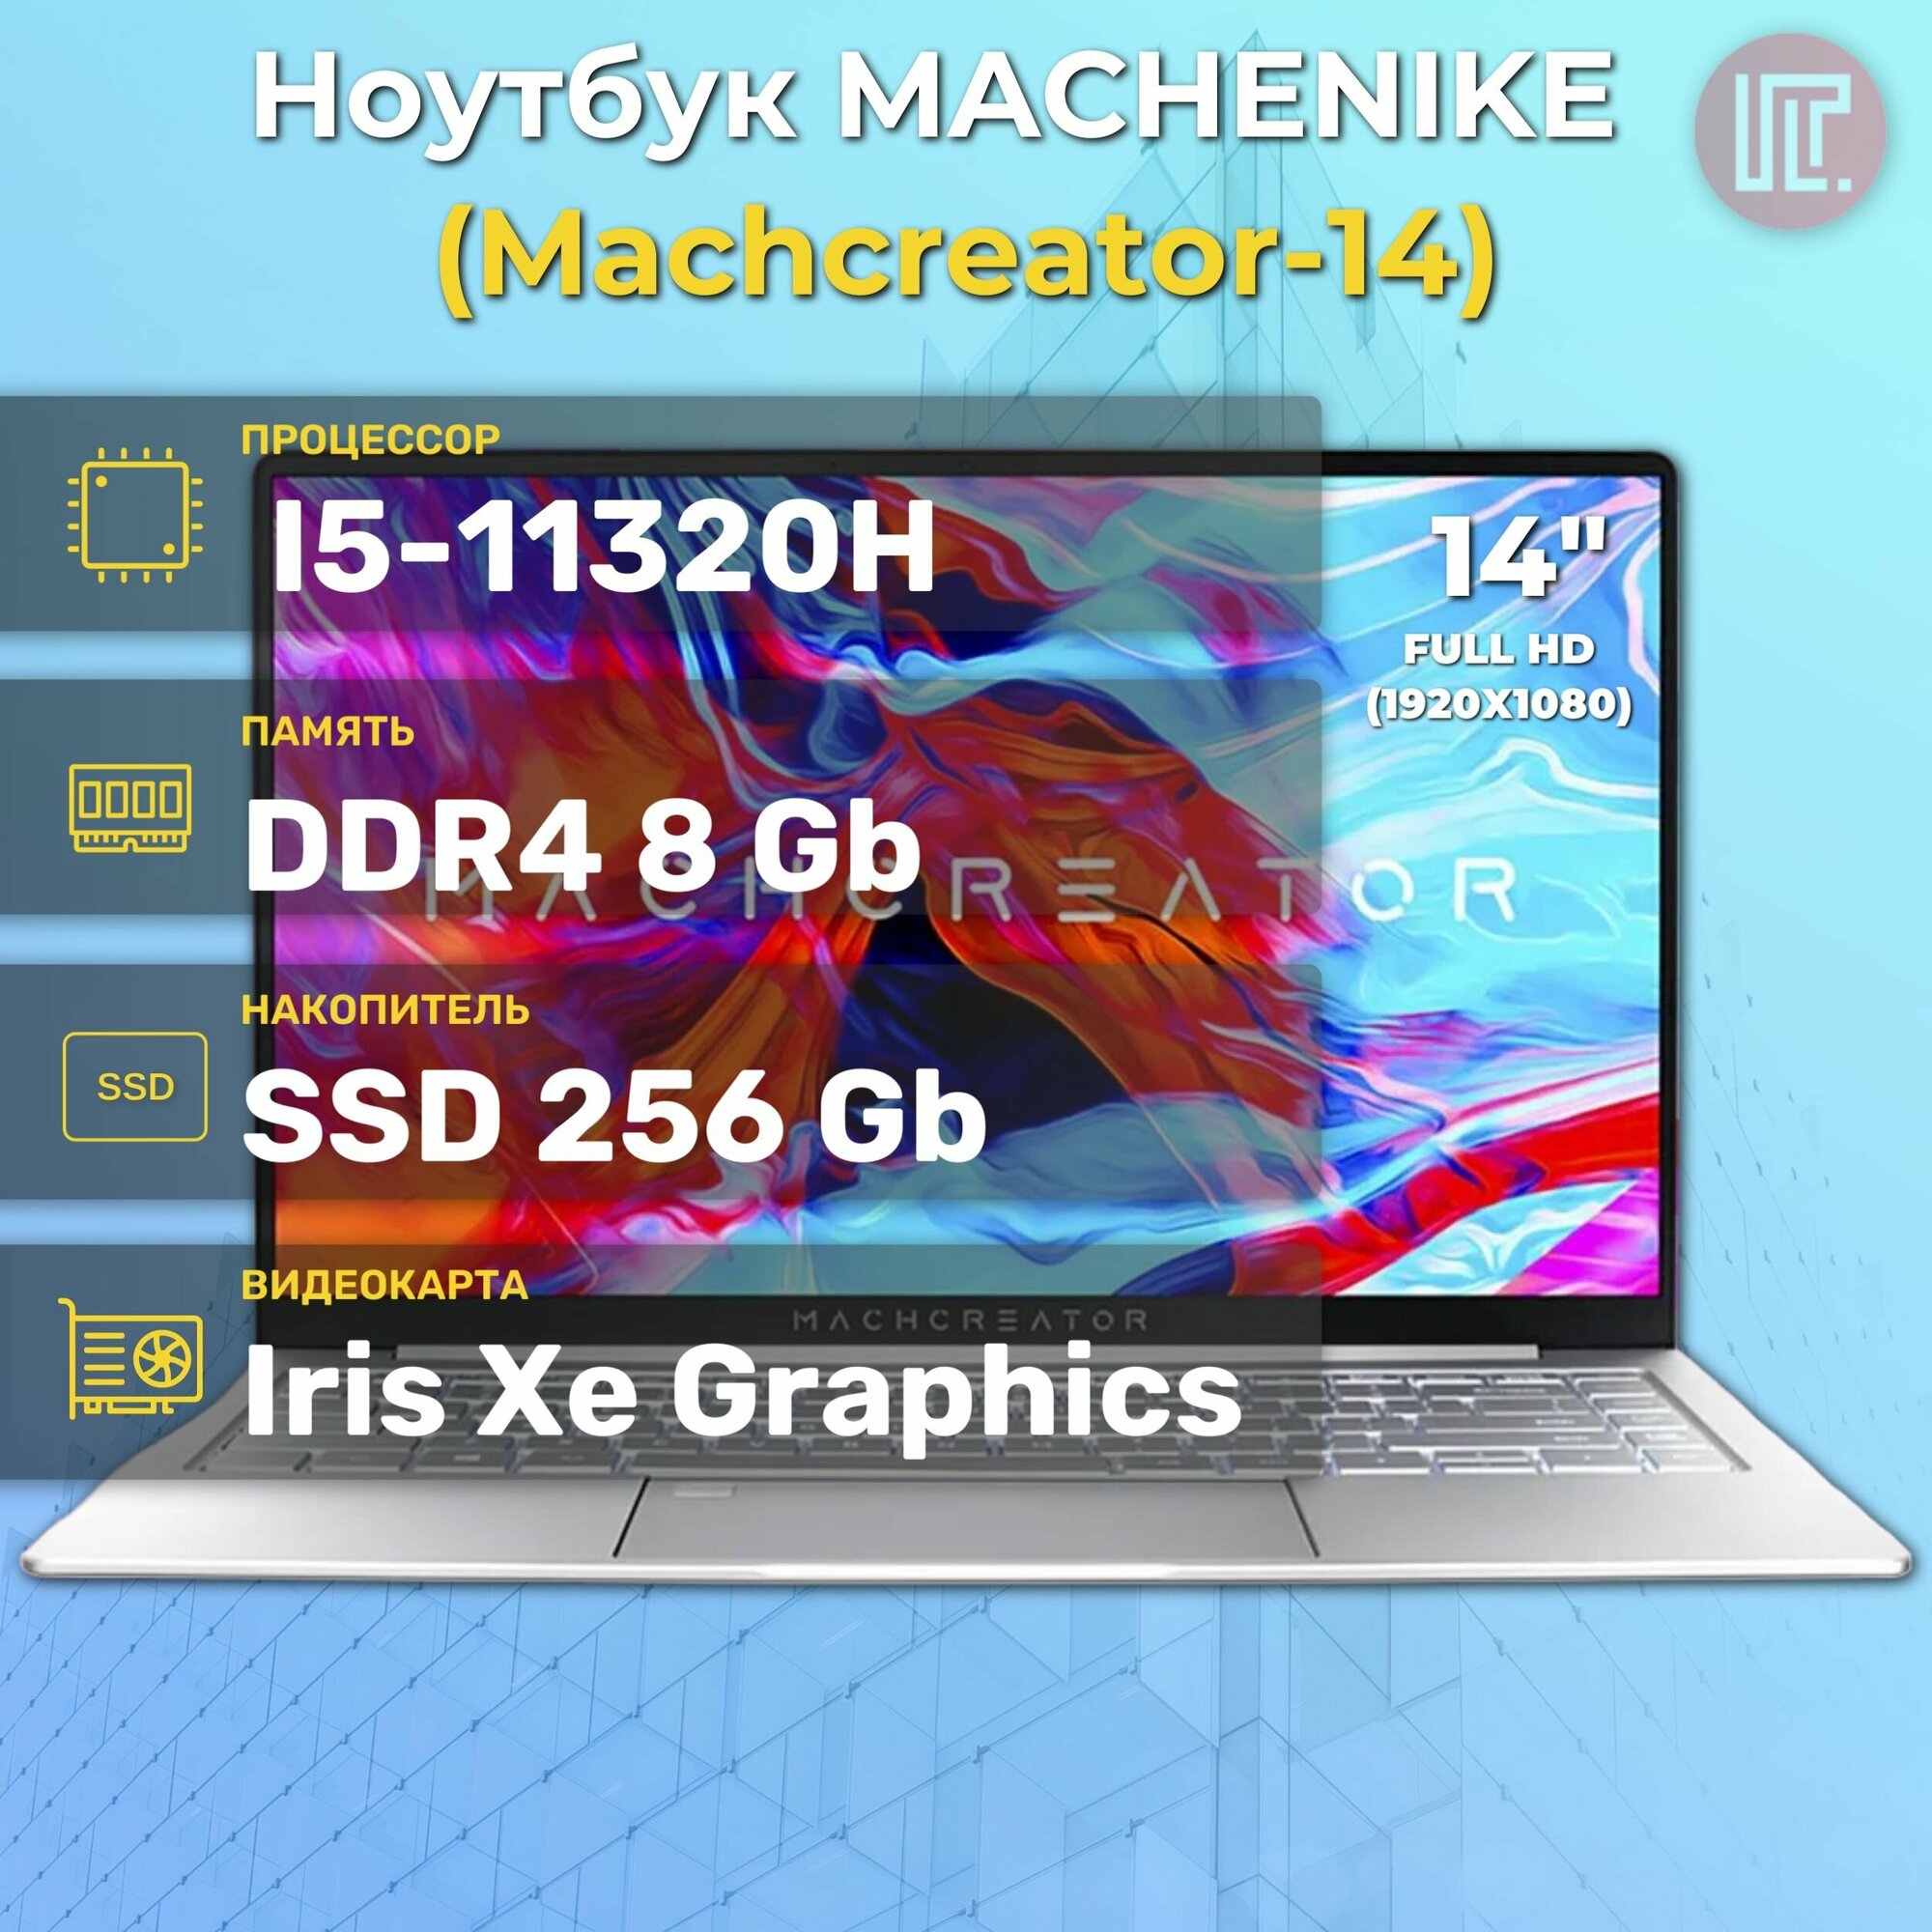 Ноутбук Machenike Machcreator-14 Silver MC-14i511320HF60HSM00RU - фото №8